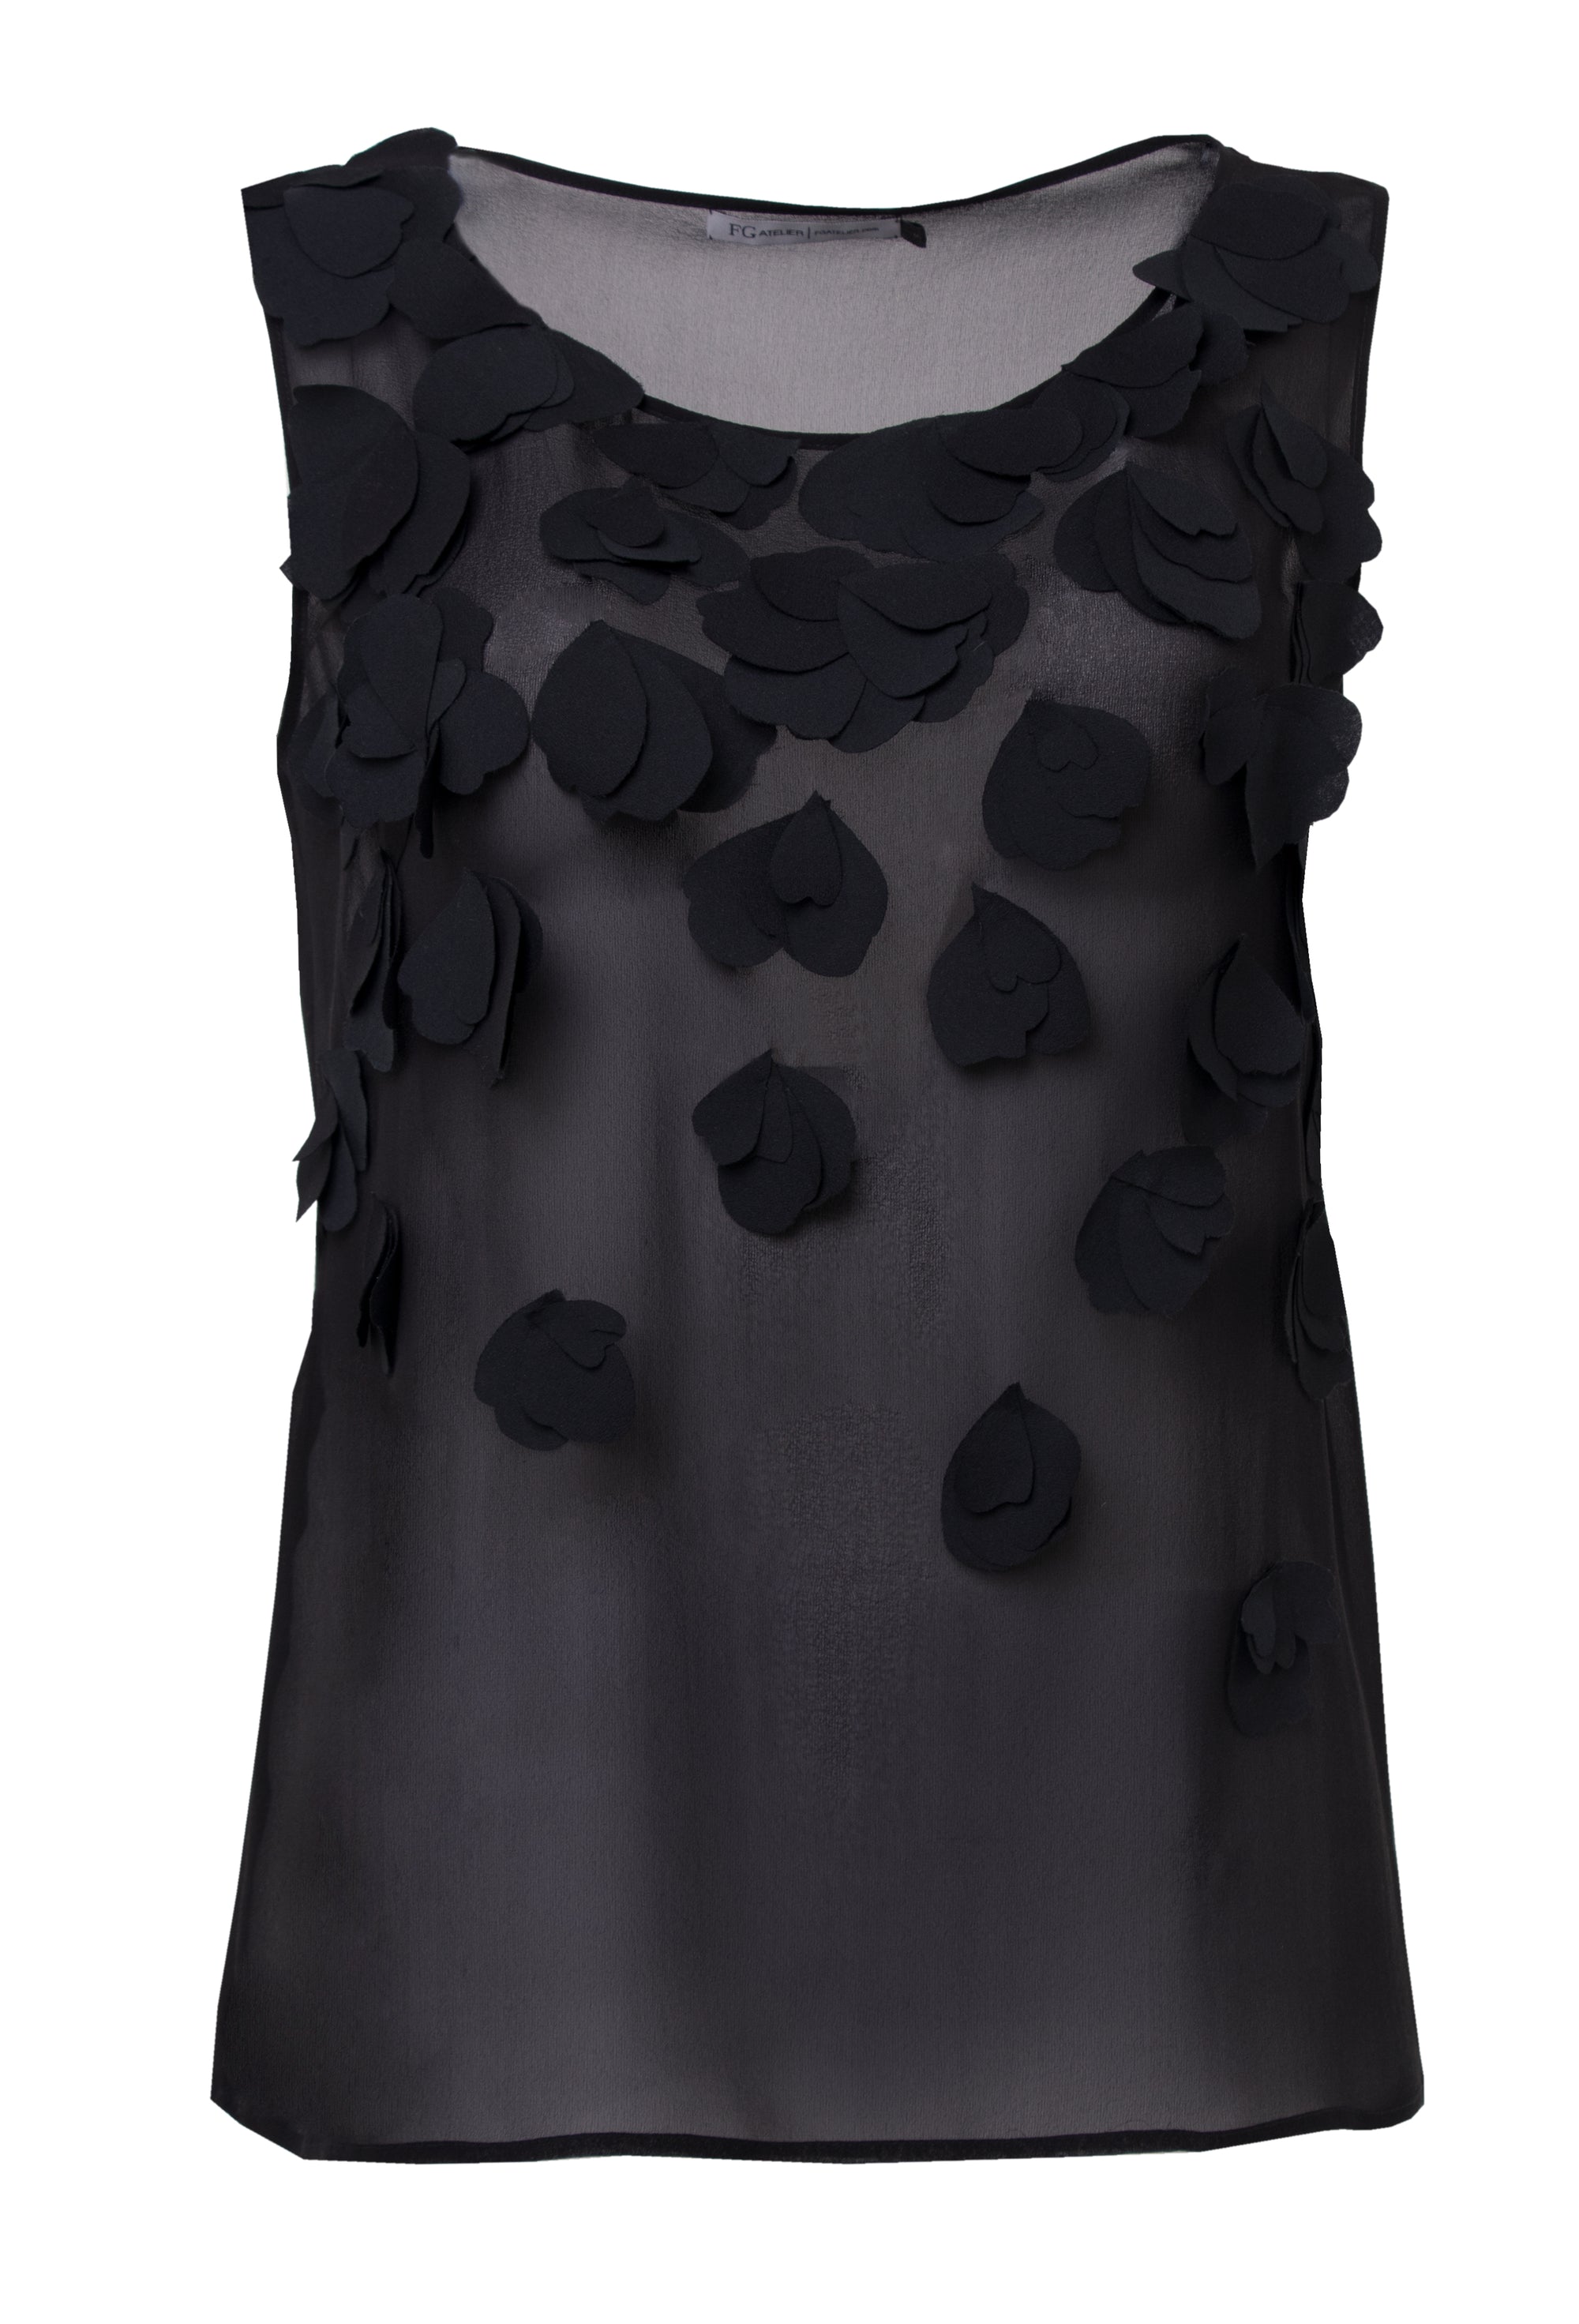 Black silk georgette sleeveless blouse with hand-cut organza petals